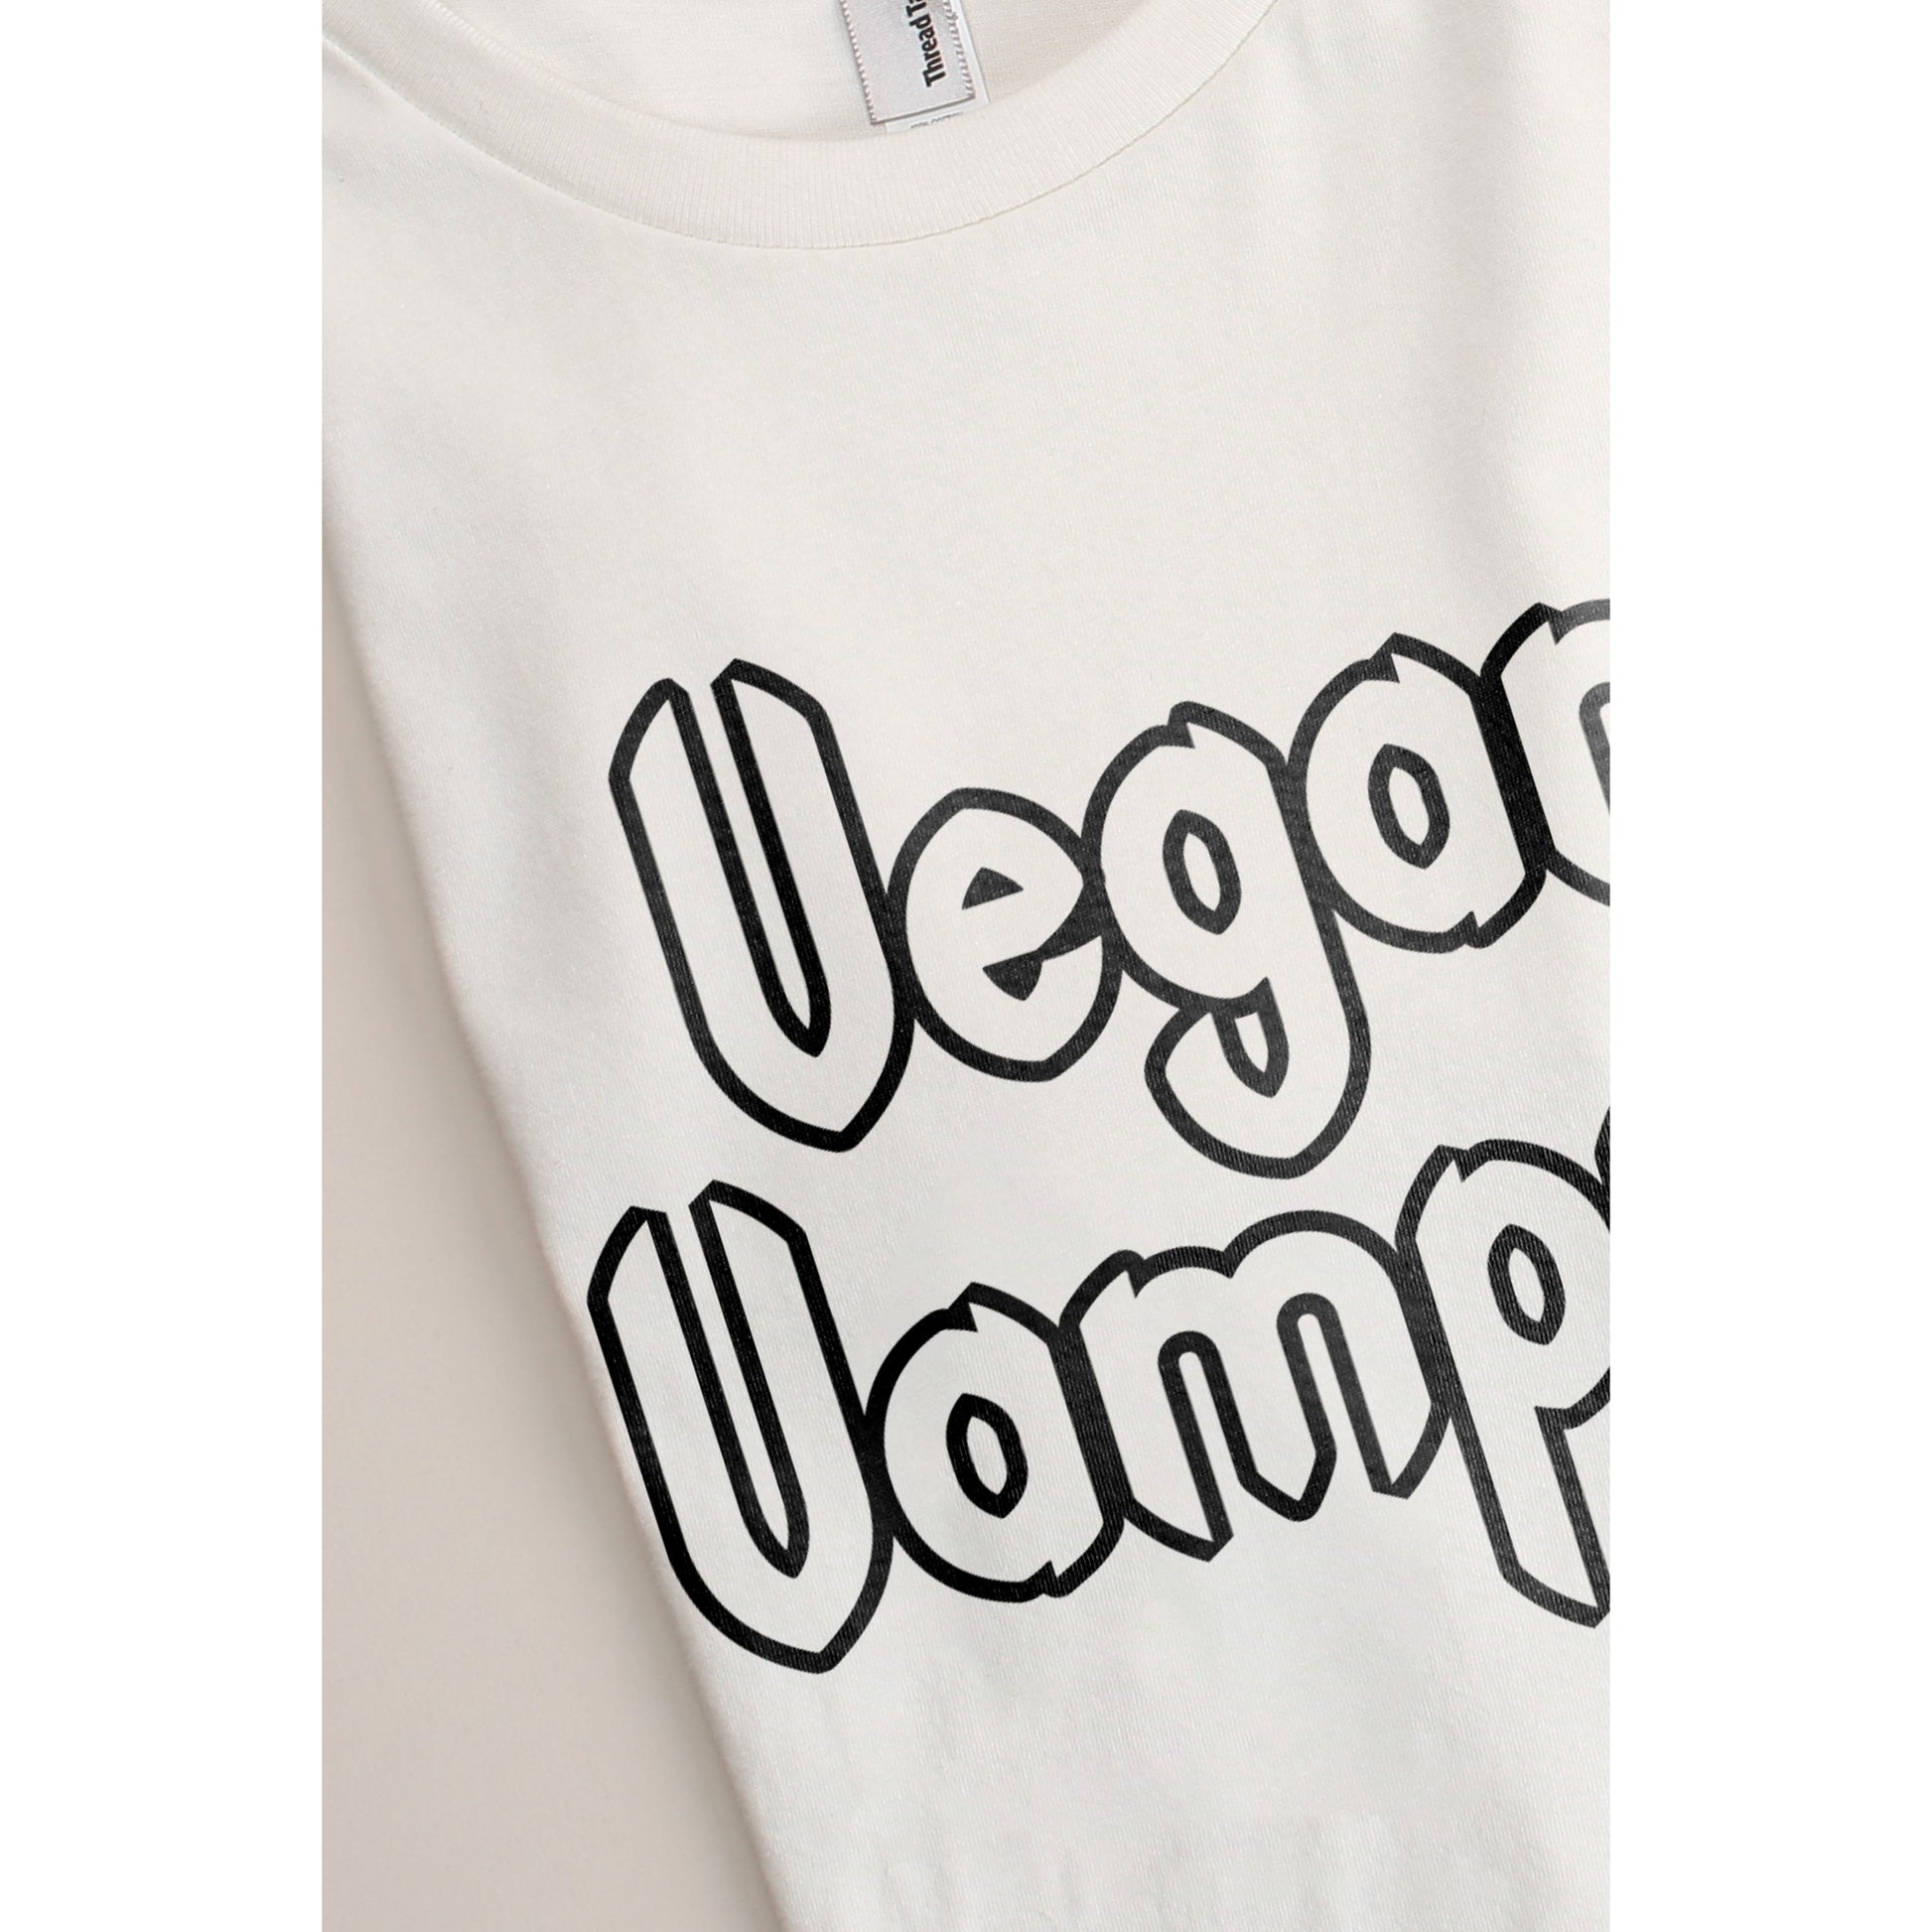 Vegan Vampire - thread tank | Stories you can wear.